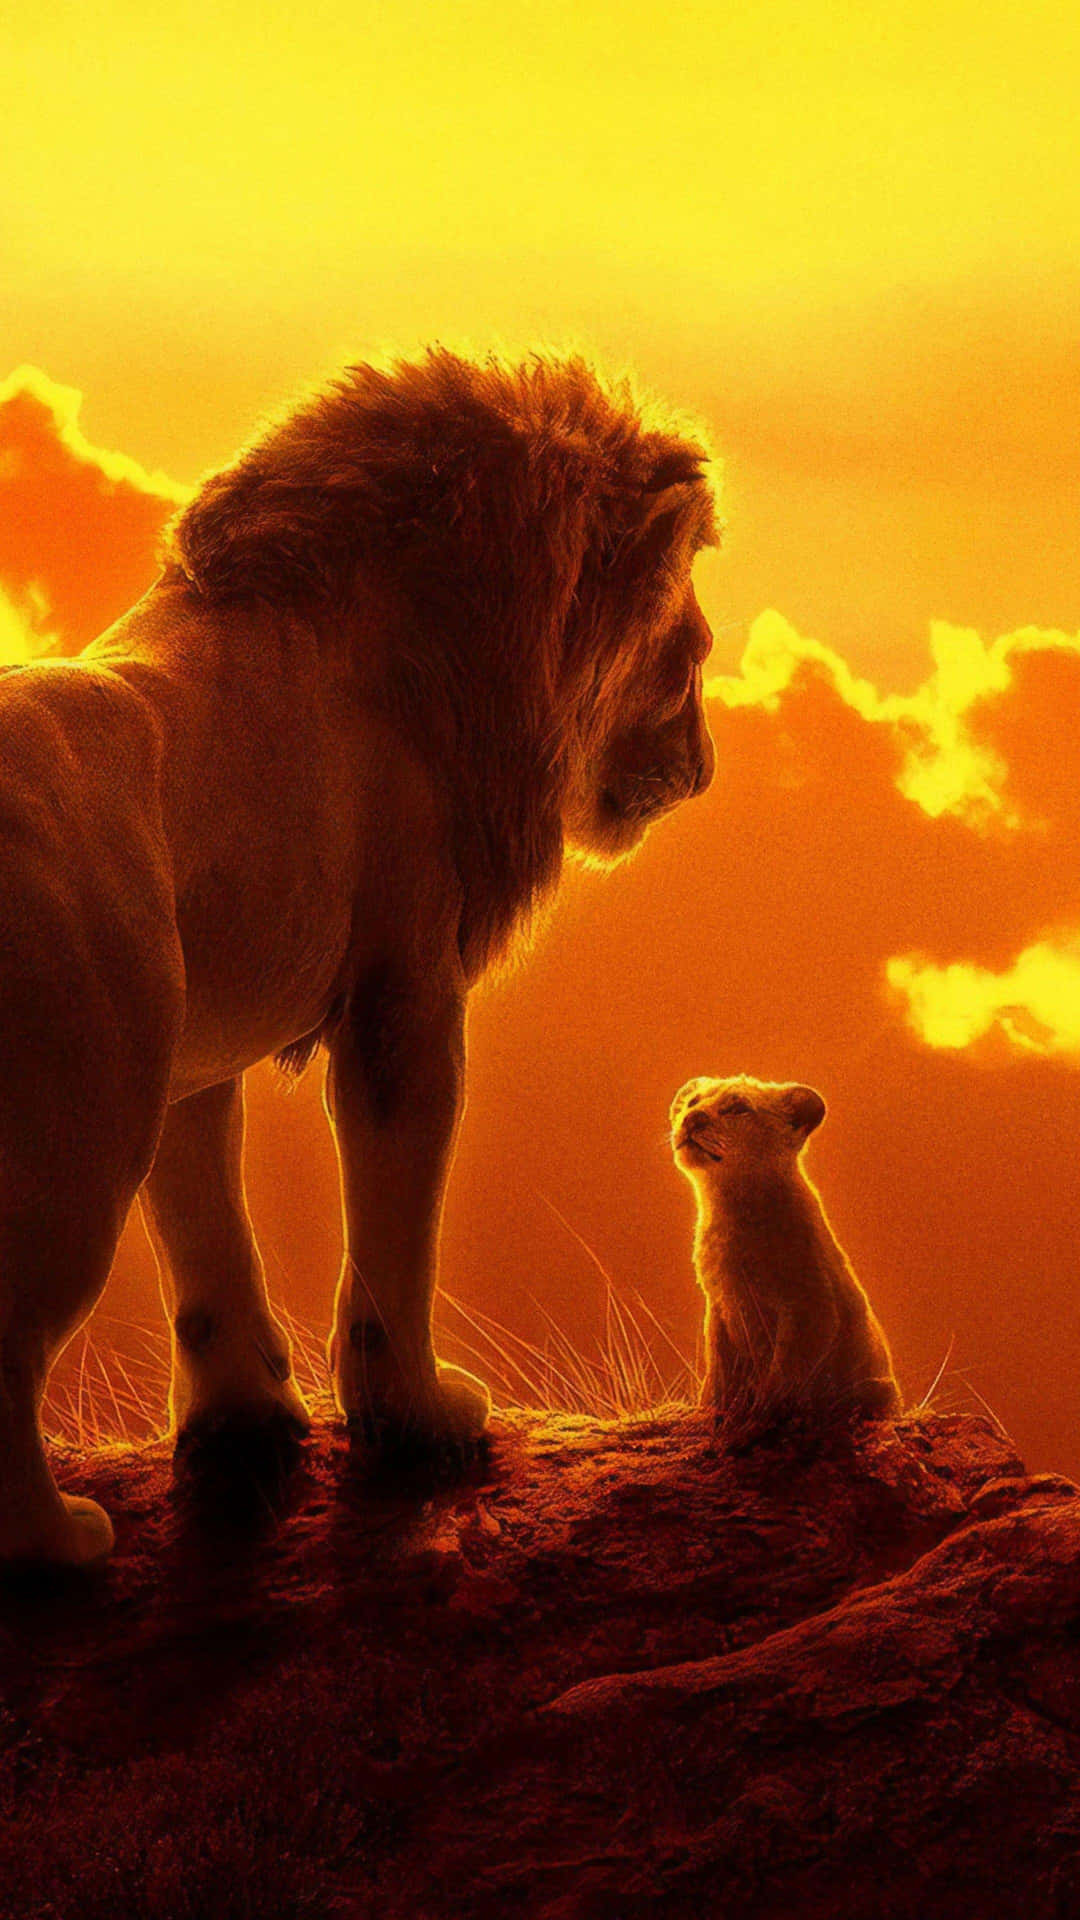 Lionand Cub Sunset Silhouette Wallpaper